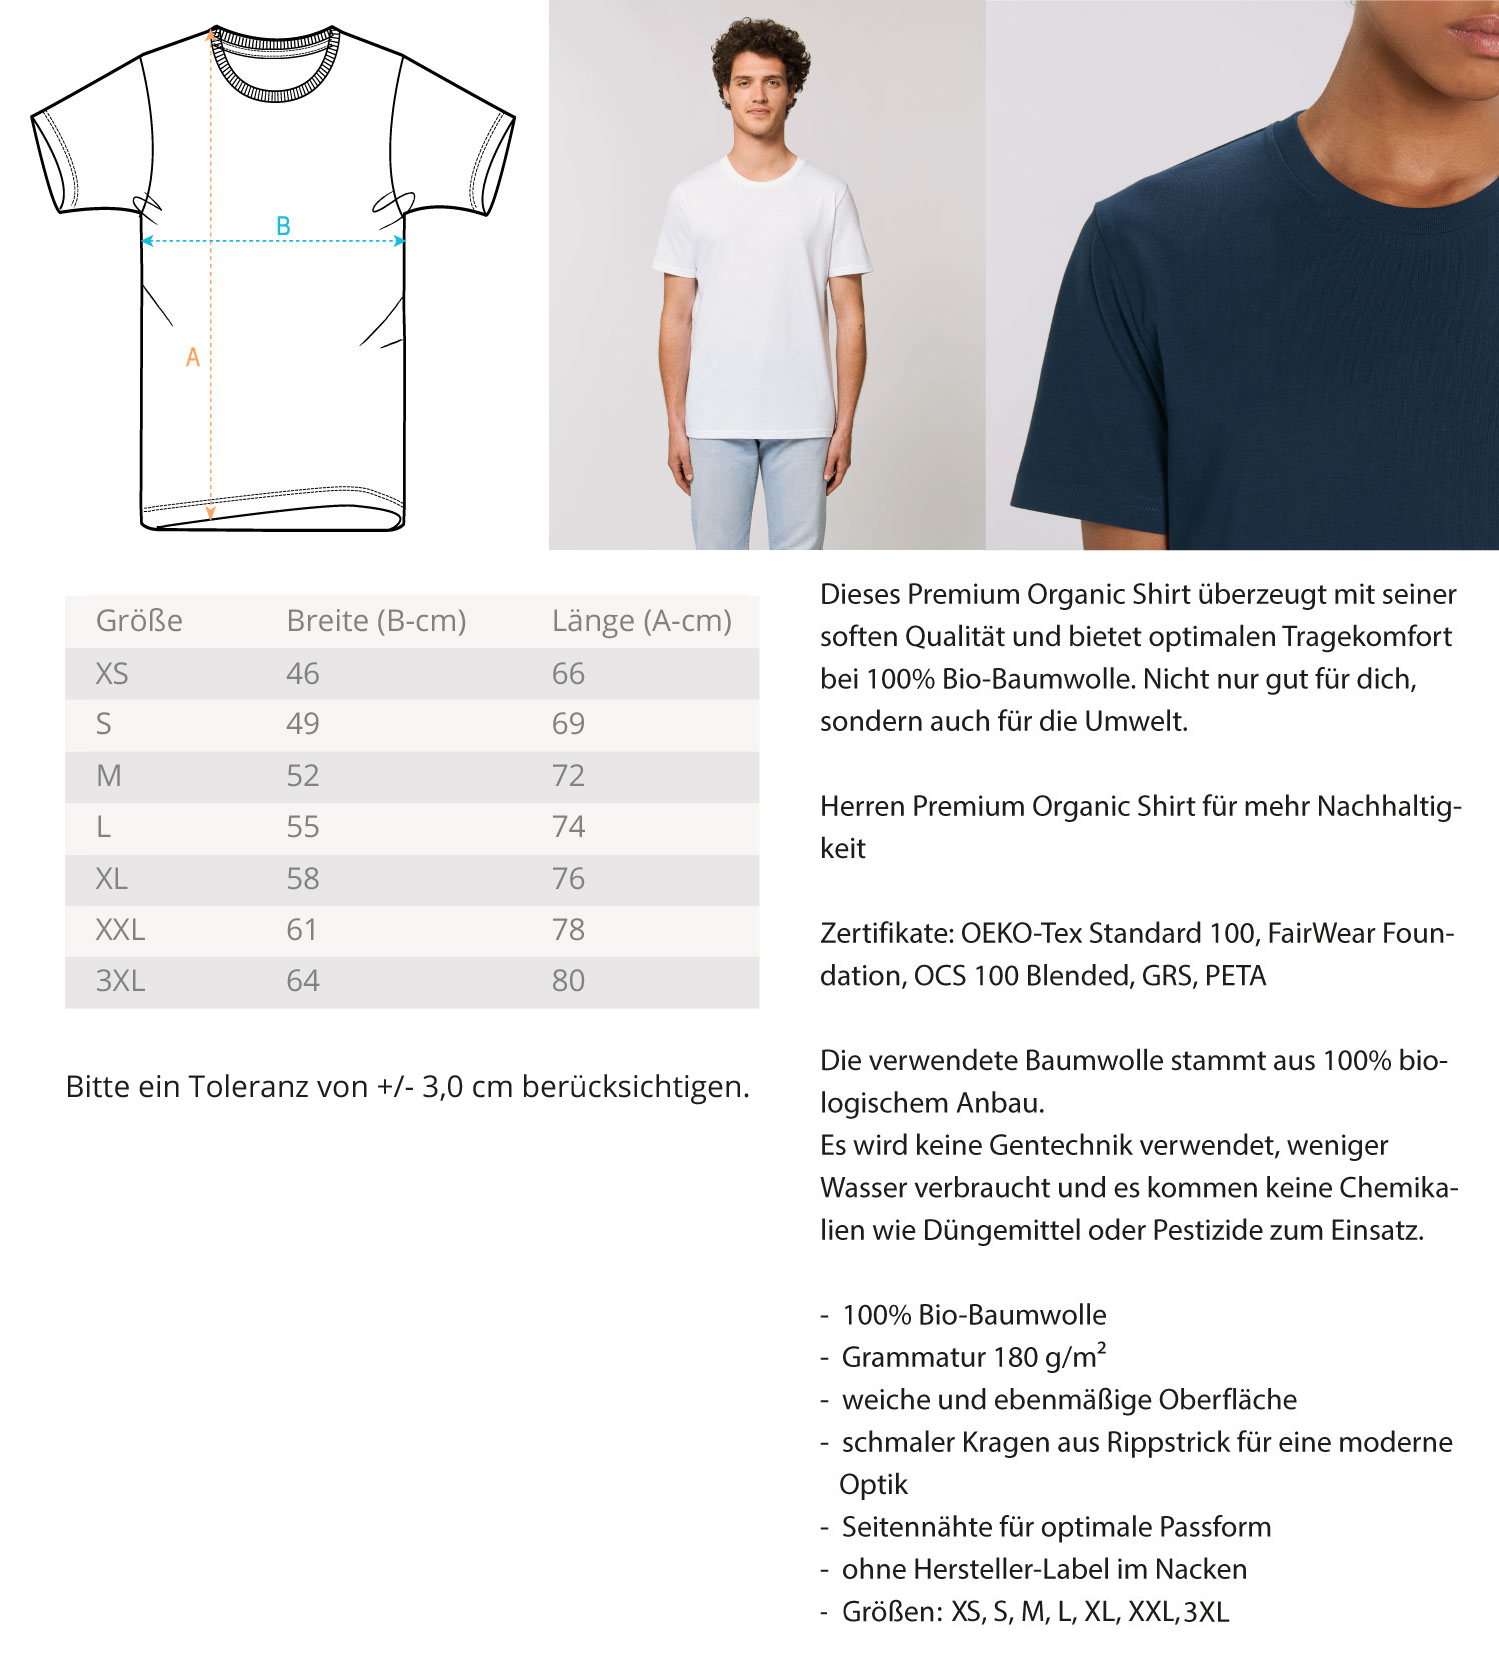 Acacia Square - Herren Premium Organic Shirt ST/ST 